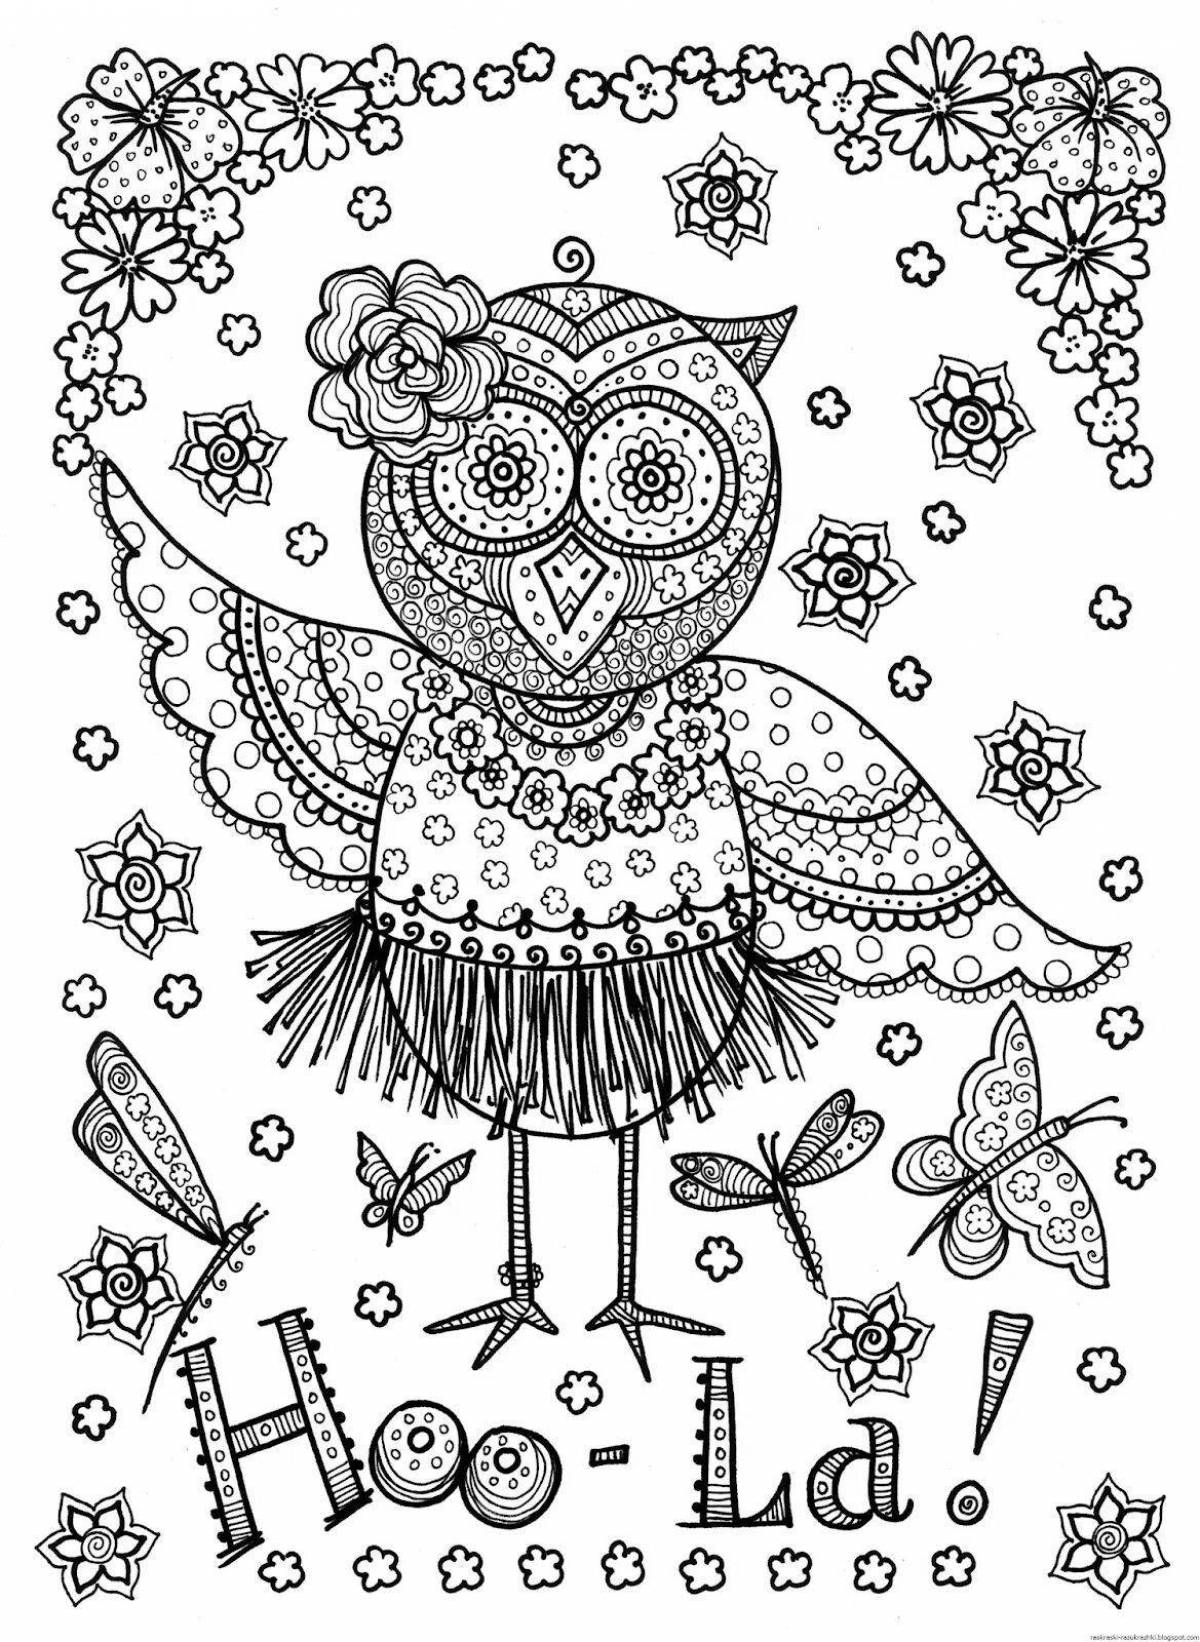 Adorable Christmas owl coloring book